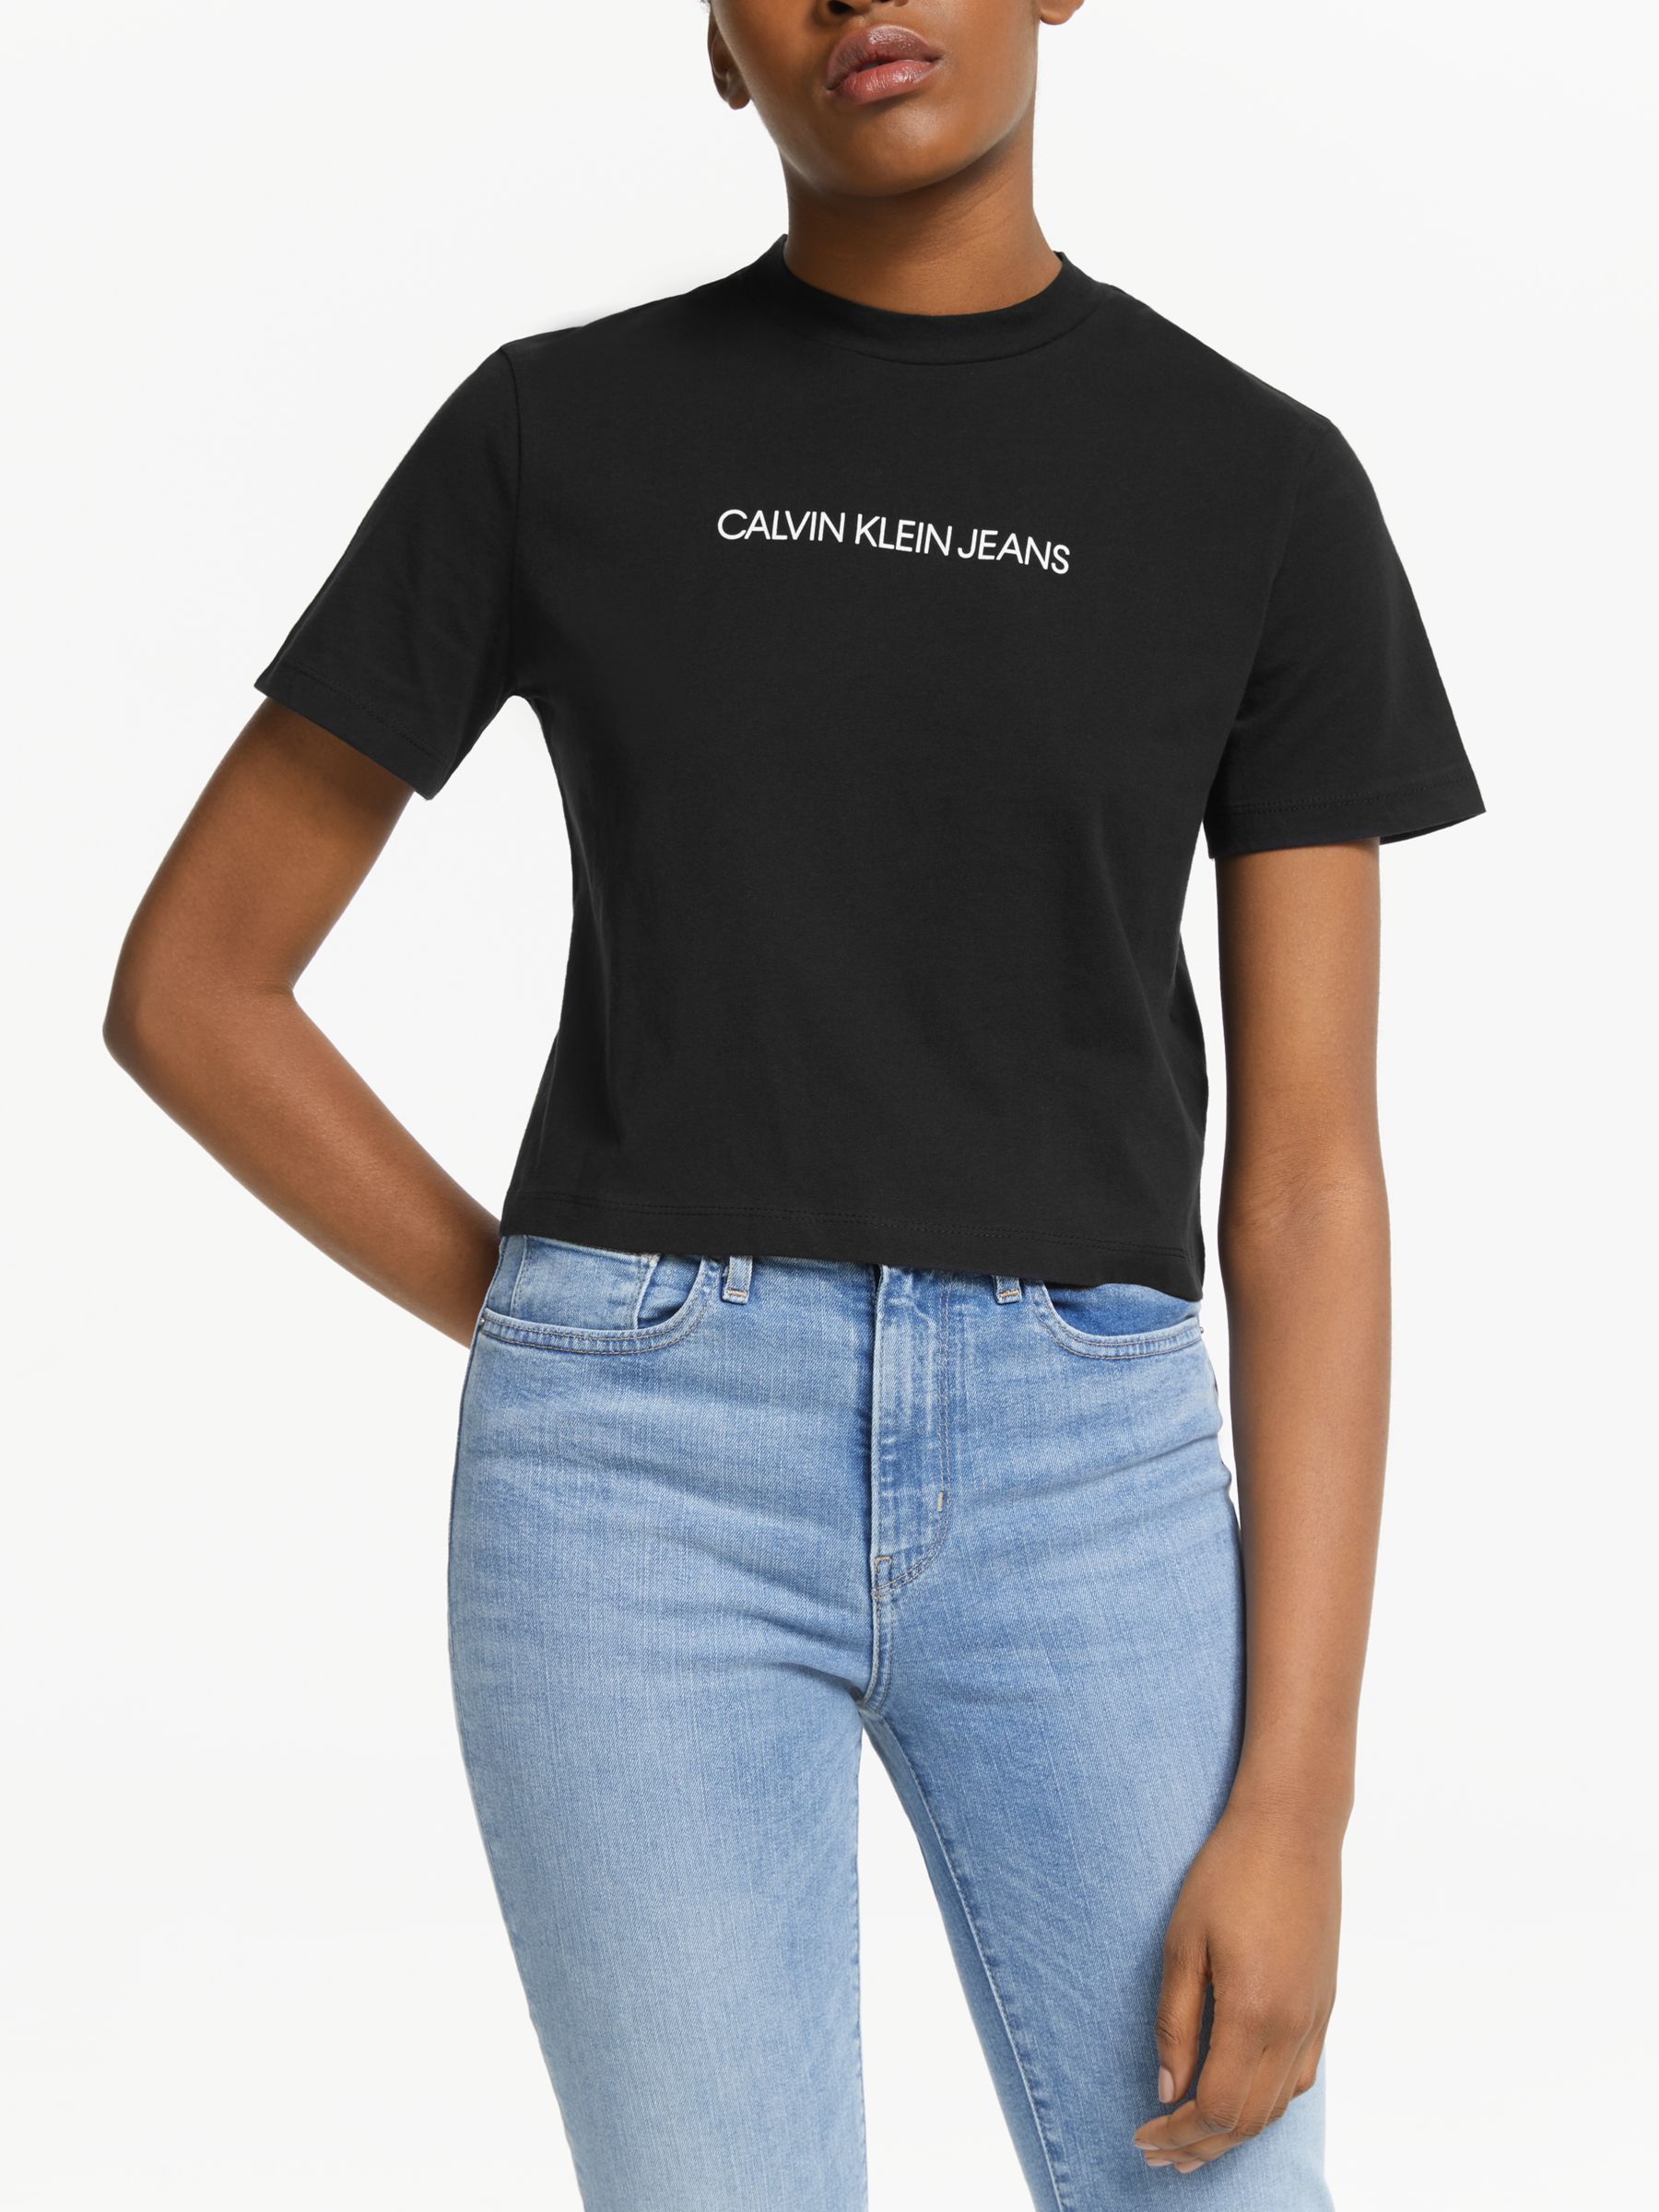 calvin klein cropped logo t shirt